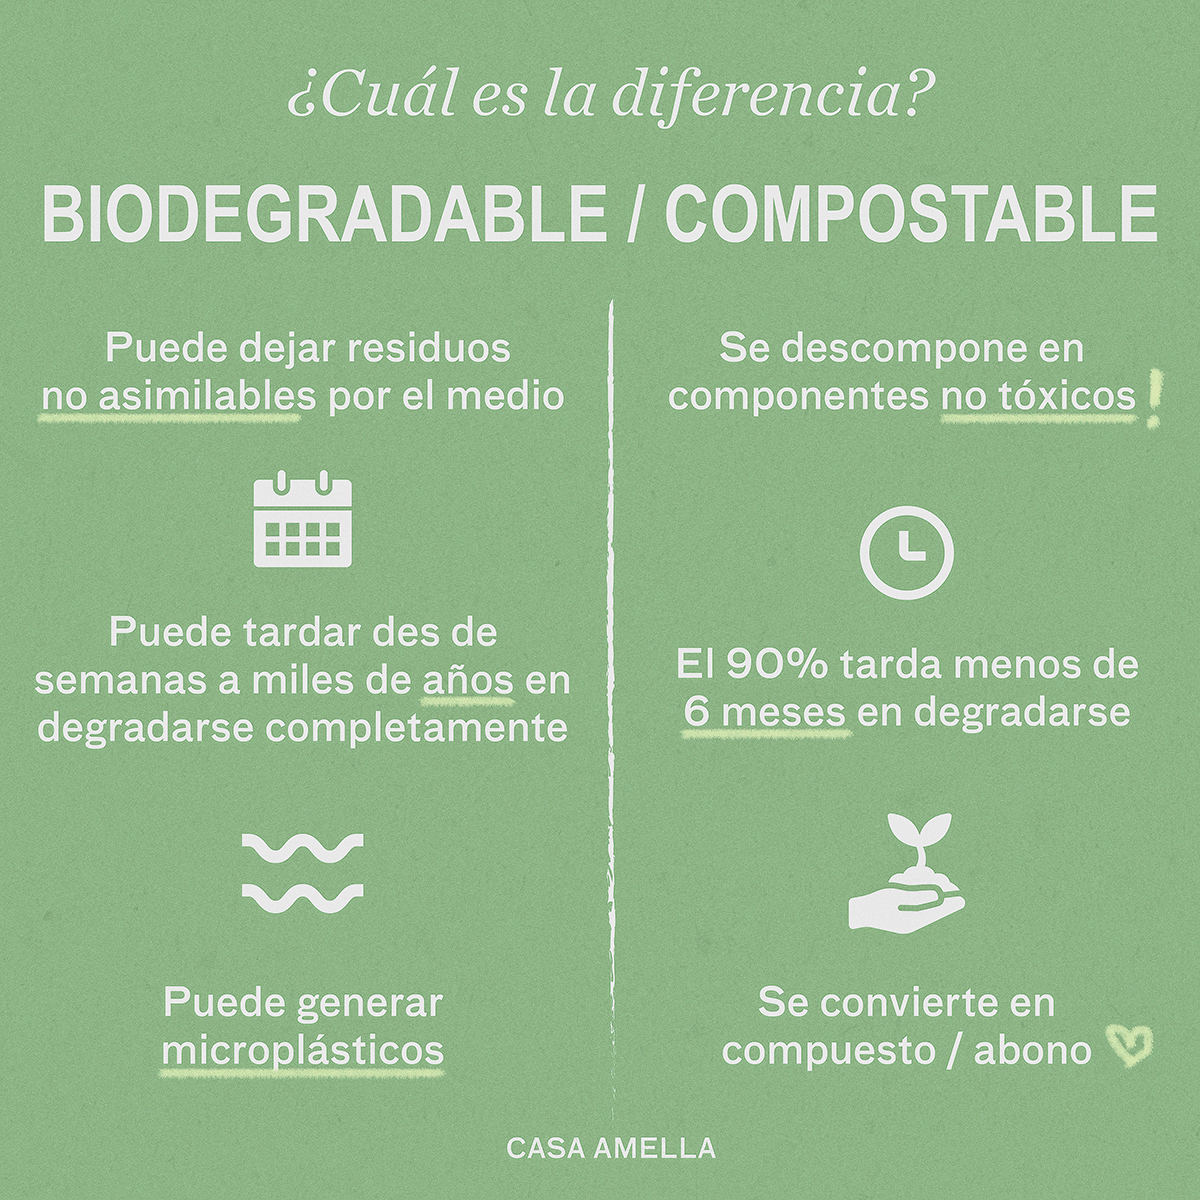 Biodegradable vs Compostable